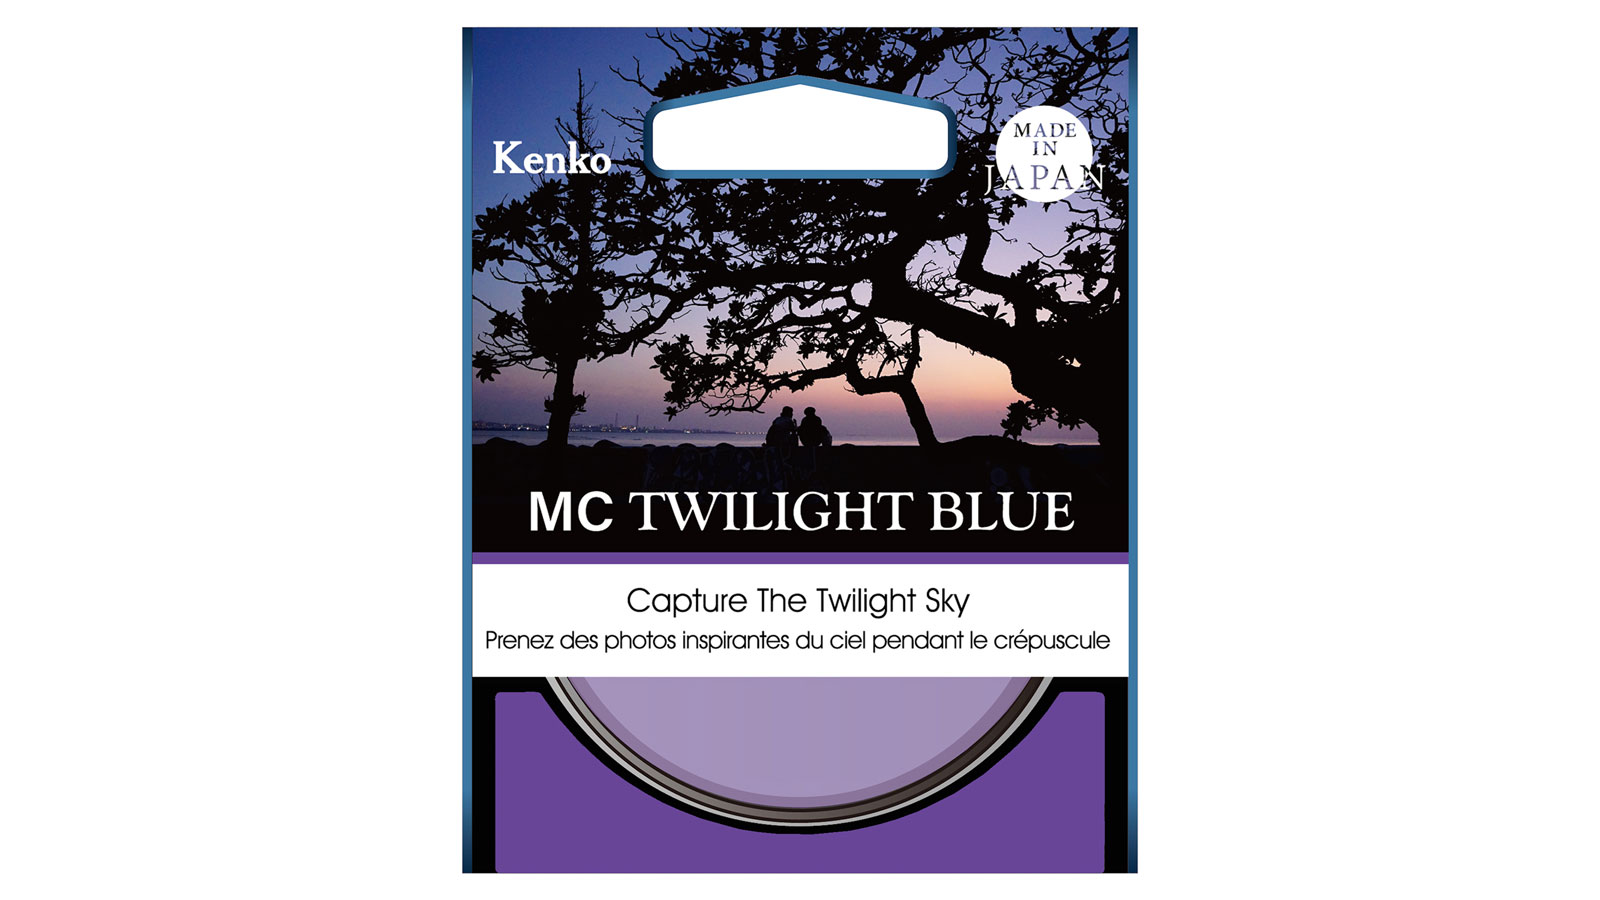 Kenko Global - New release of Kenko MC Twilight Blue filter